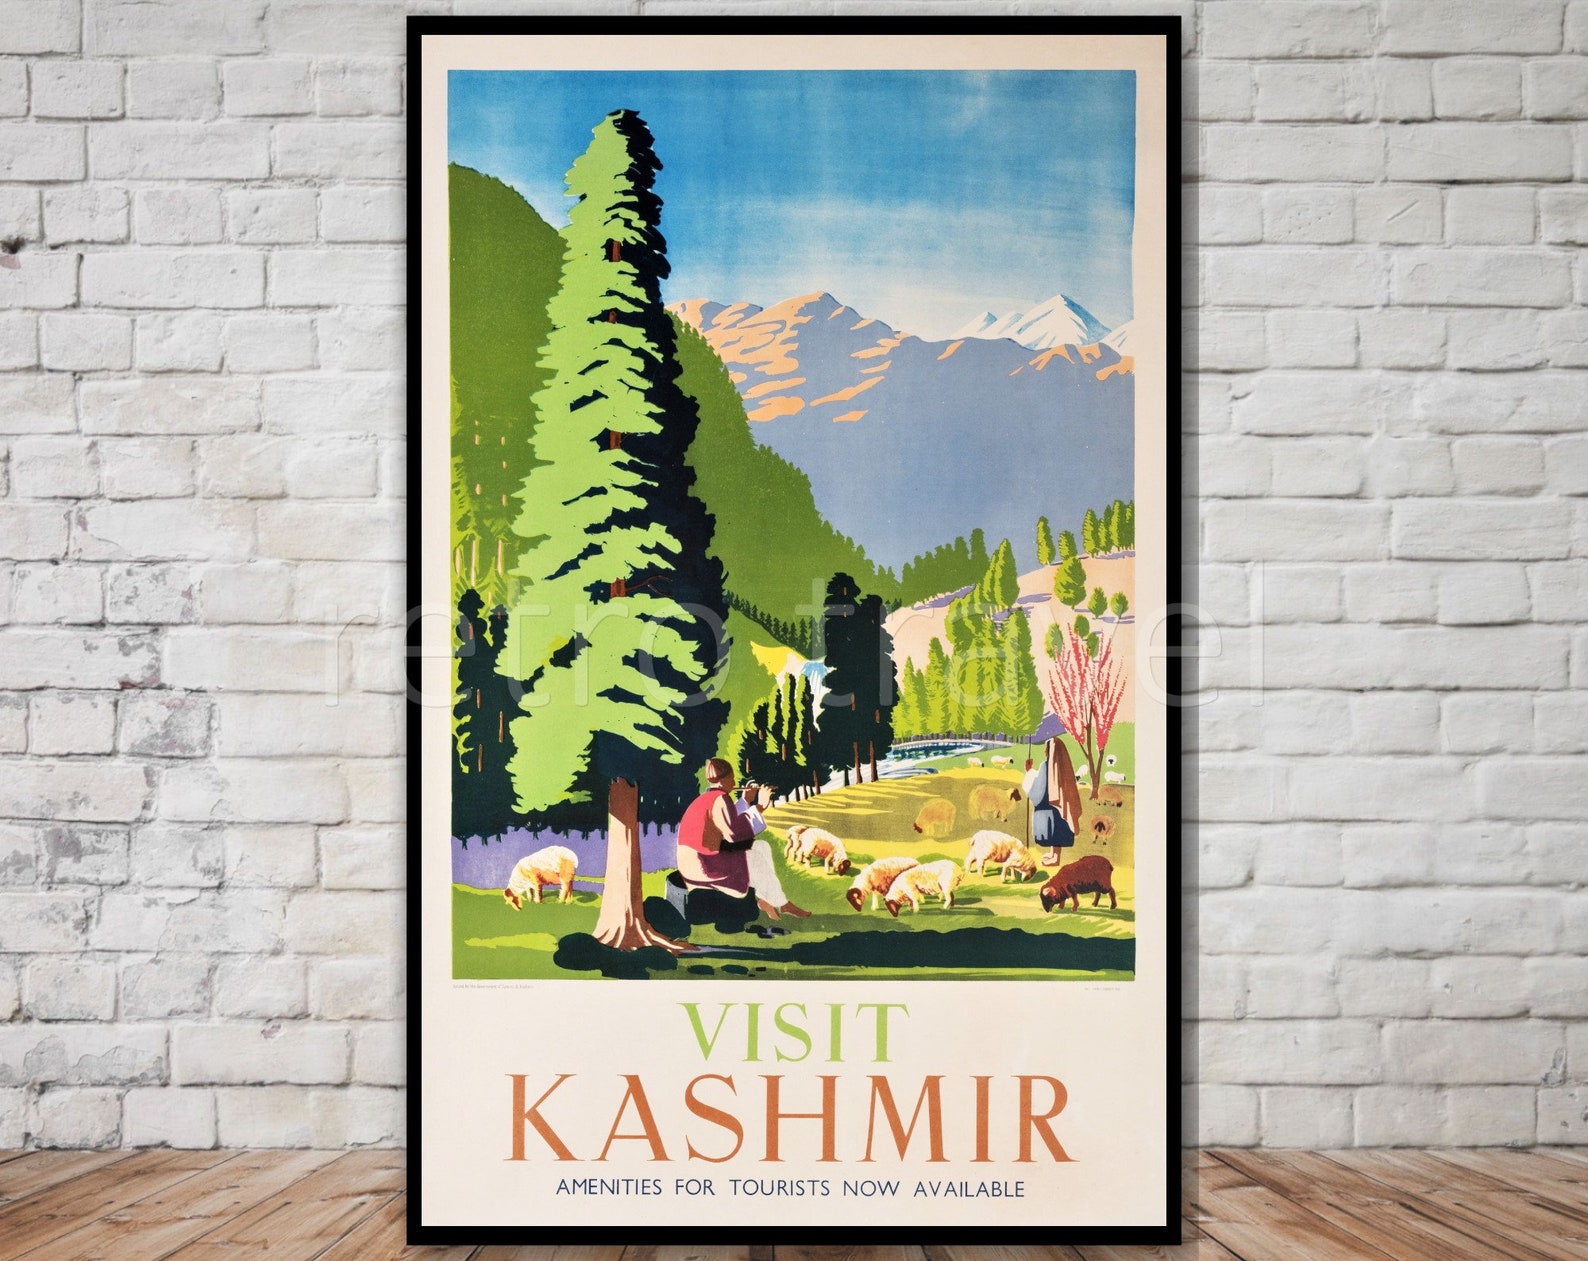 kashmir tourism slogan